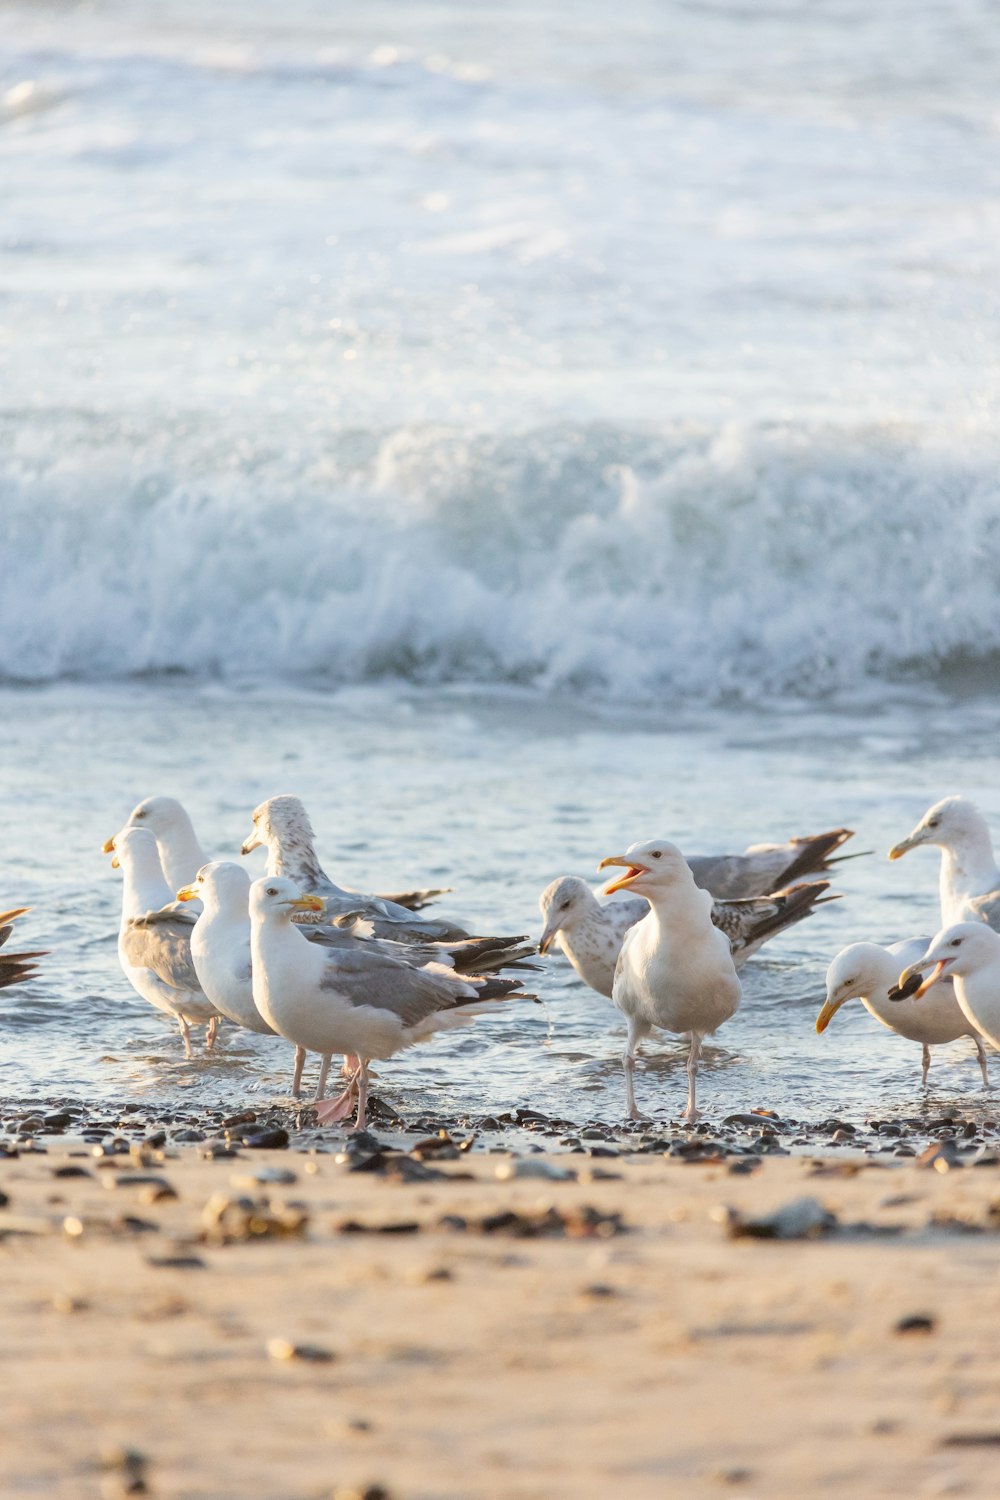 a group of seagulls on a beach